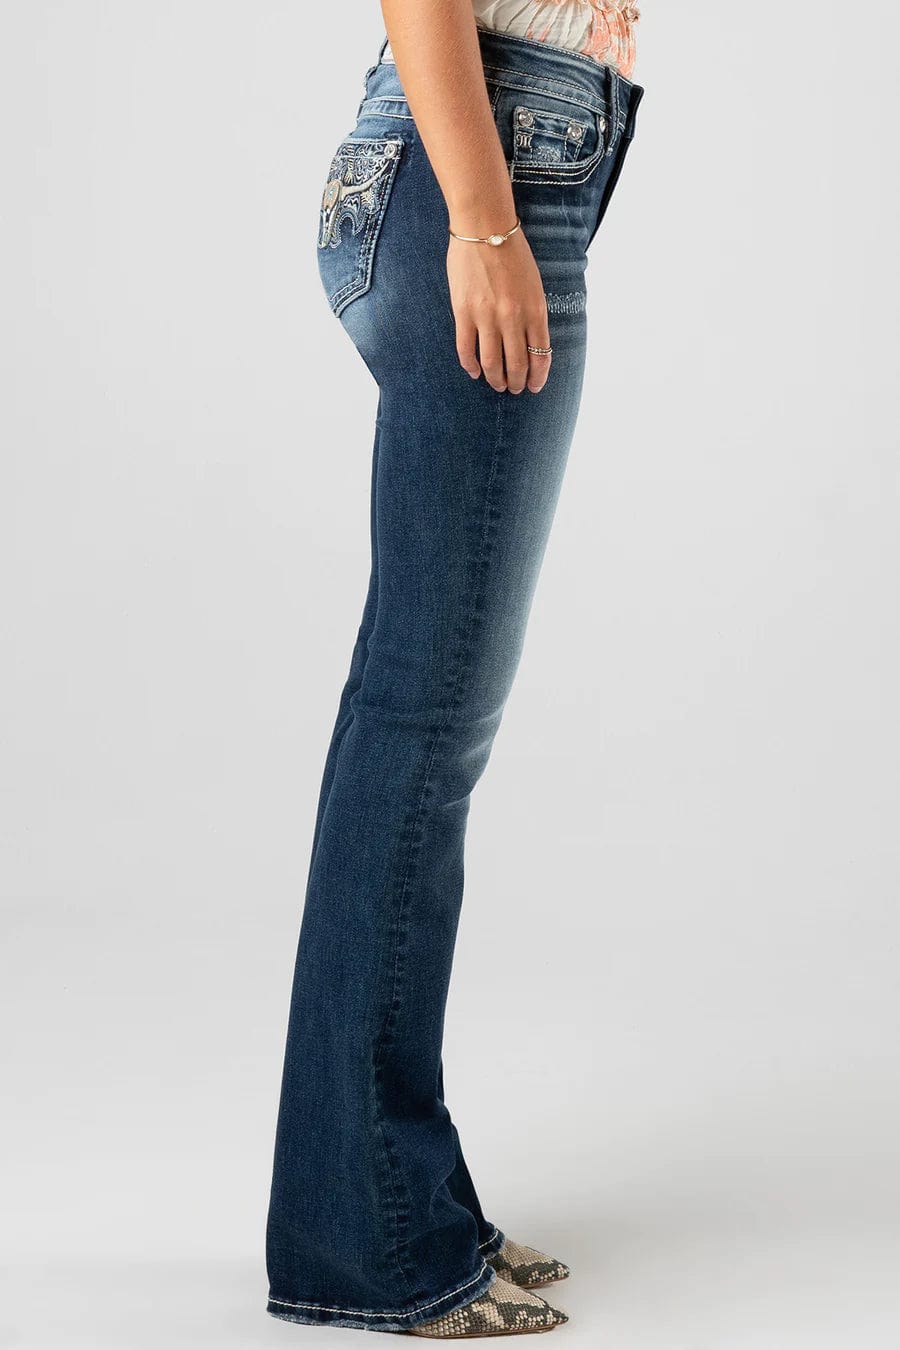 Miss Me Women's Tropical Longhorn High Rise Bootcut Jeans M3891B -  Russell's Western Wear, Inc.